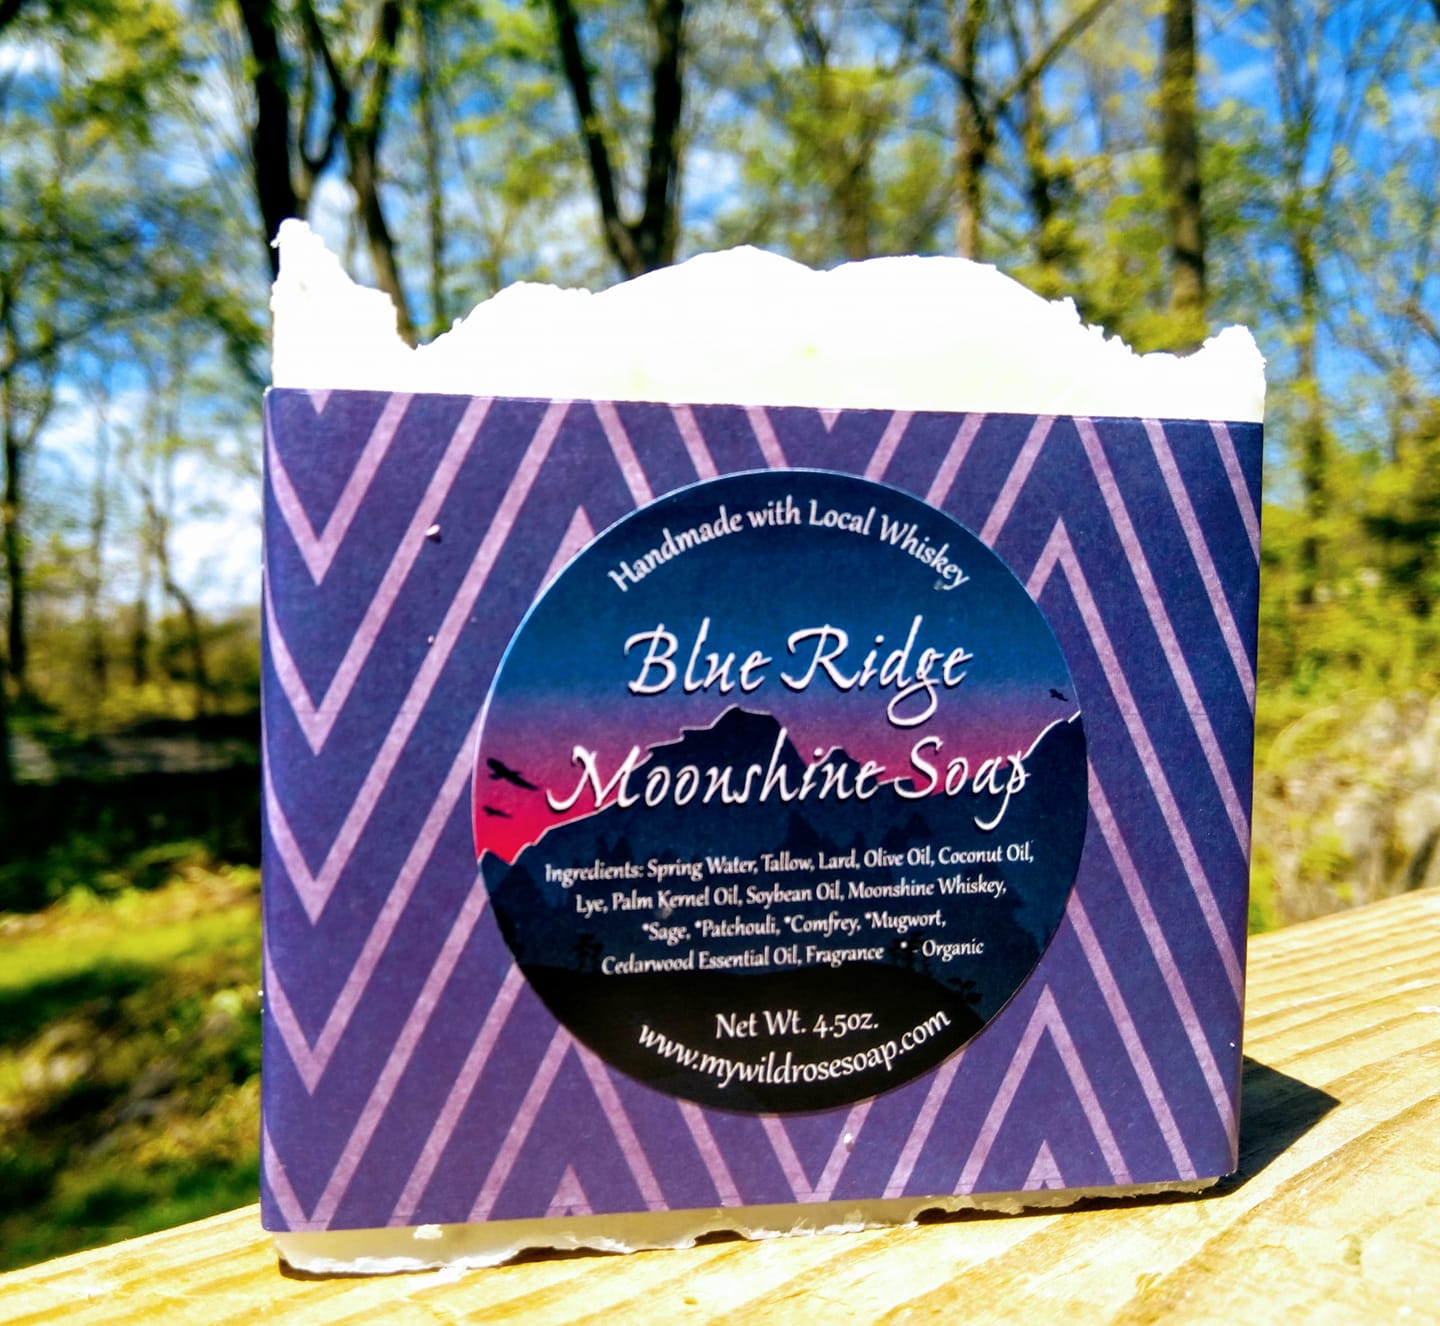 Blue Ridge Mountain Moonshine Soap